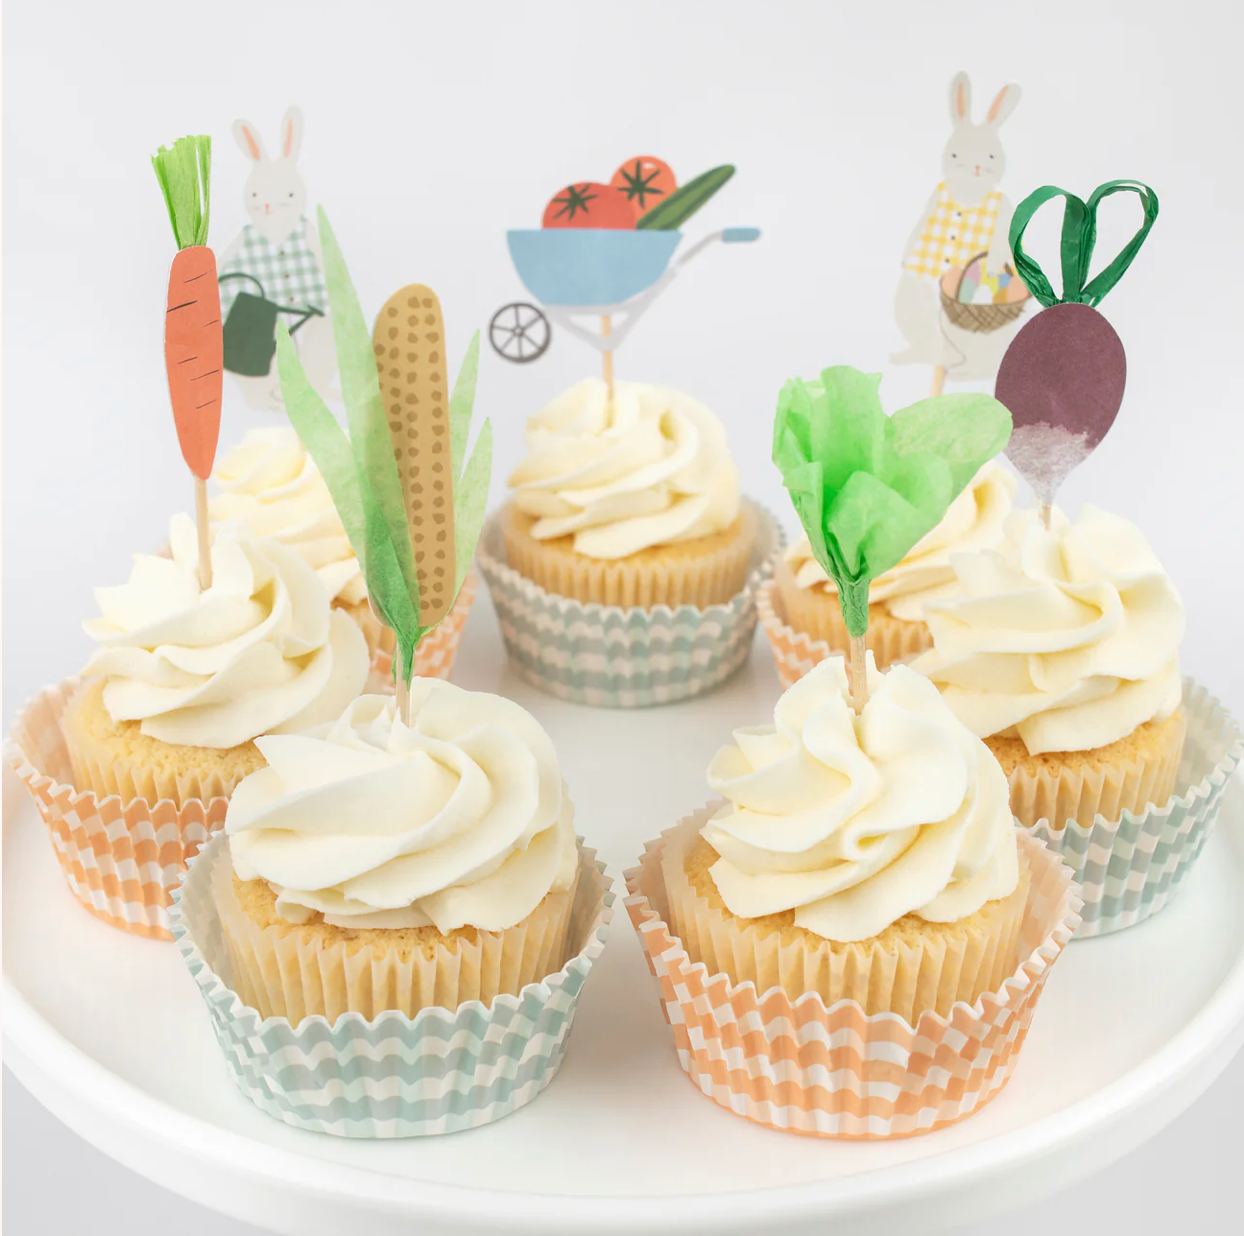 Cupcake kit pascua Greenhouse